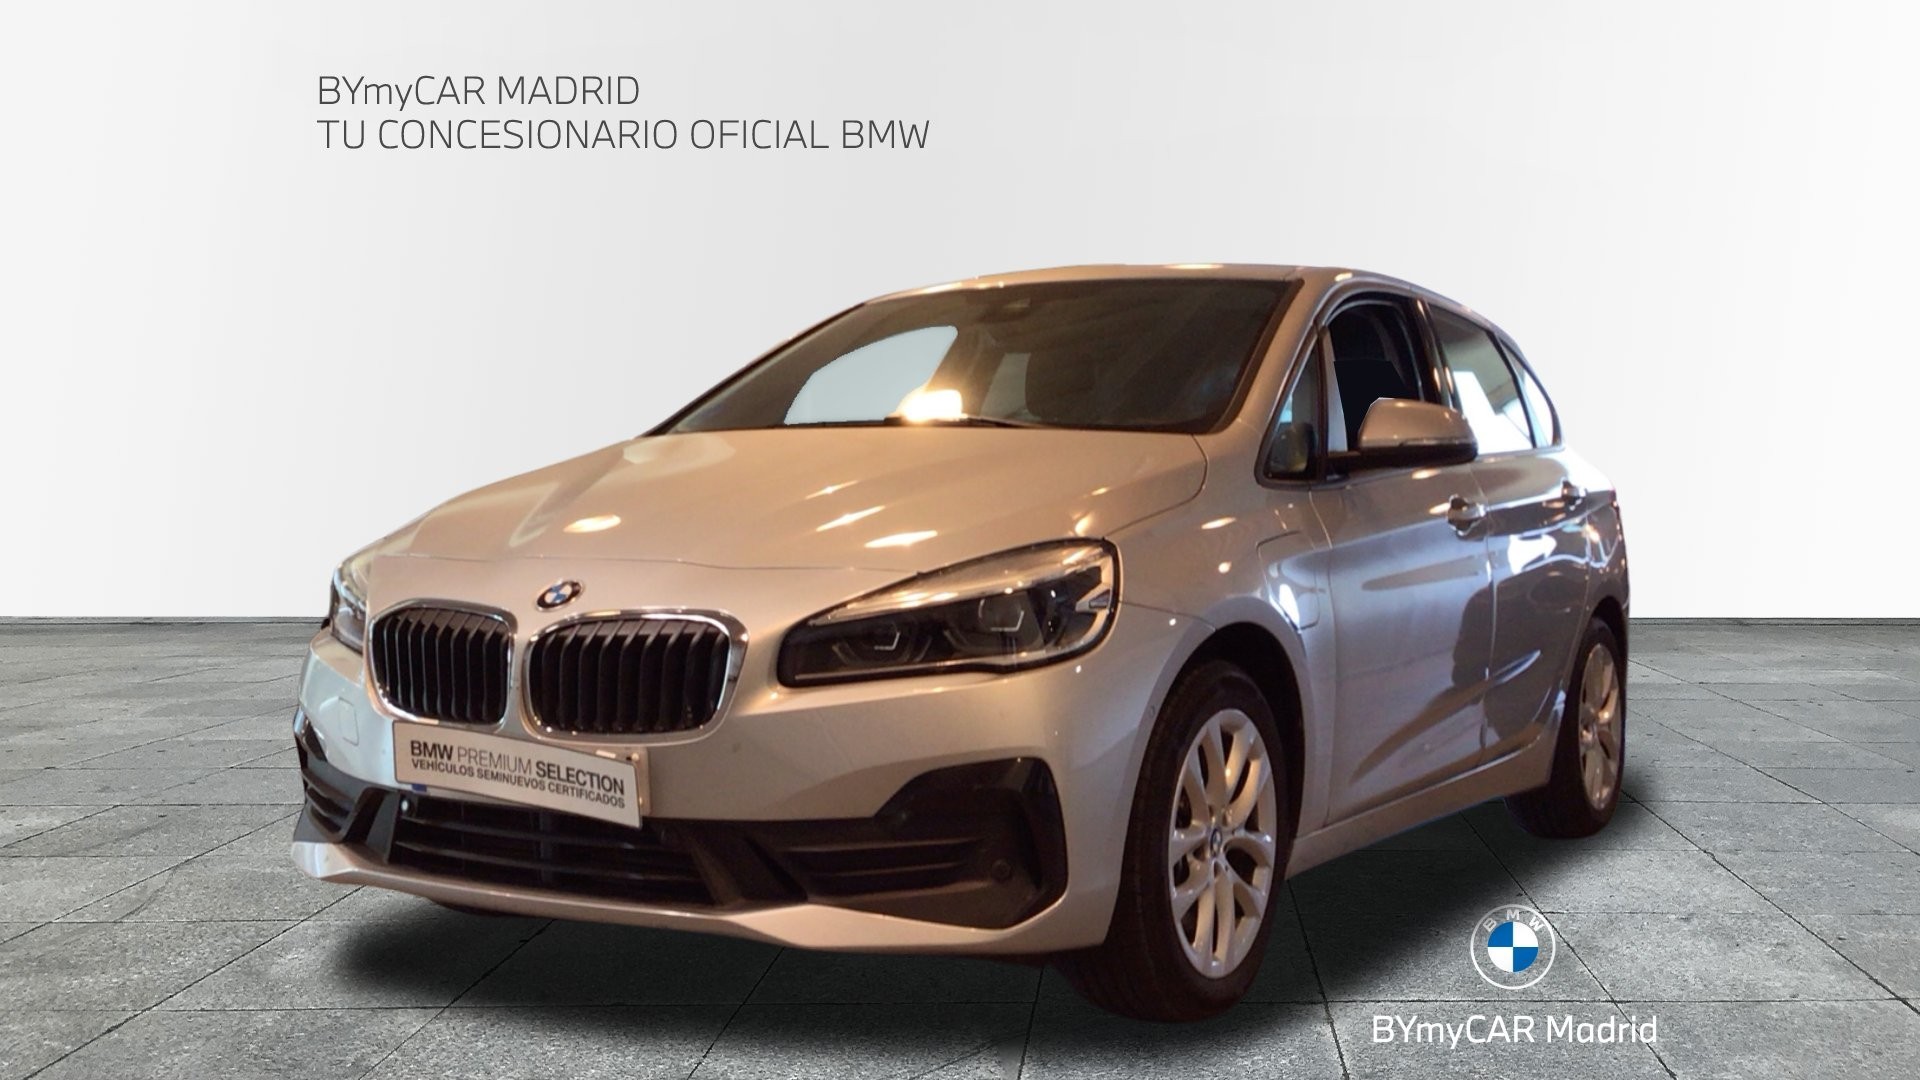 BMW Serie 2 225xe iPerformance Active Tourer color Gris Plata. Año 2020. 165KW(224CV). Híbrido Electro/Gasolina. En concesionario BYmyCAR Madrid - Alcalá de Madrid